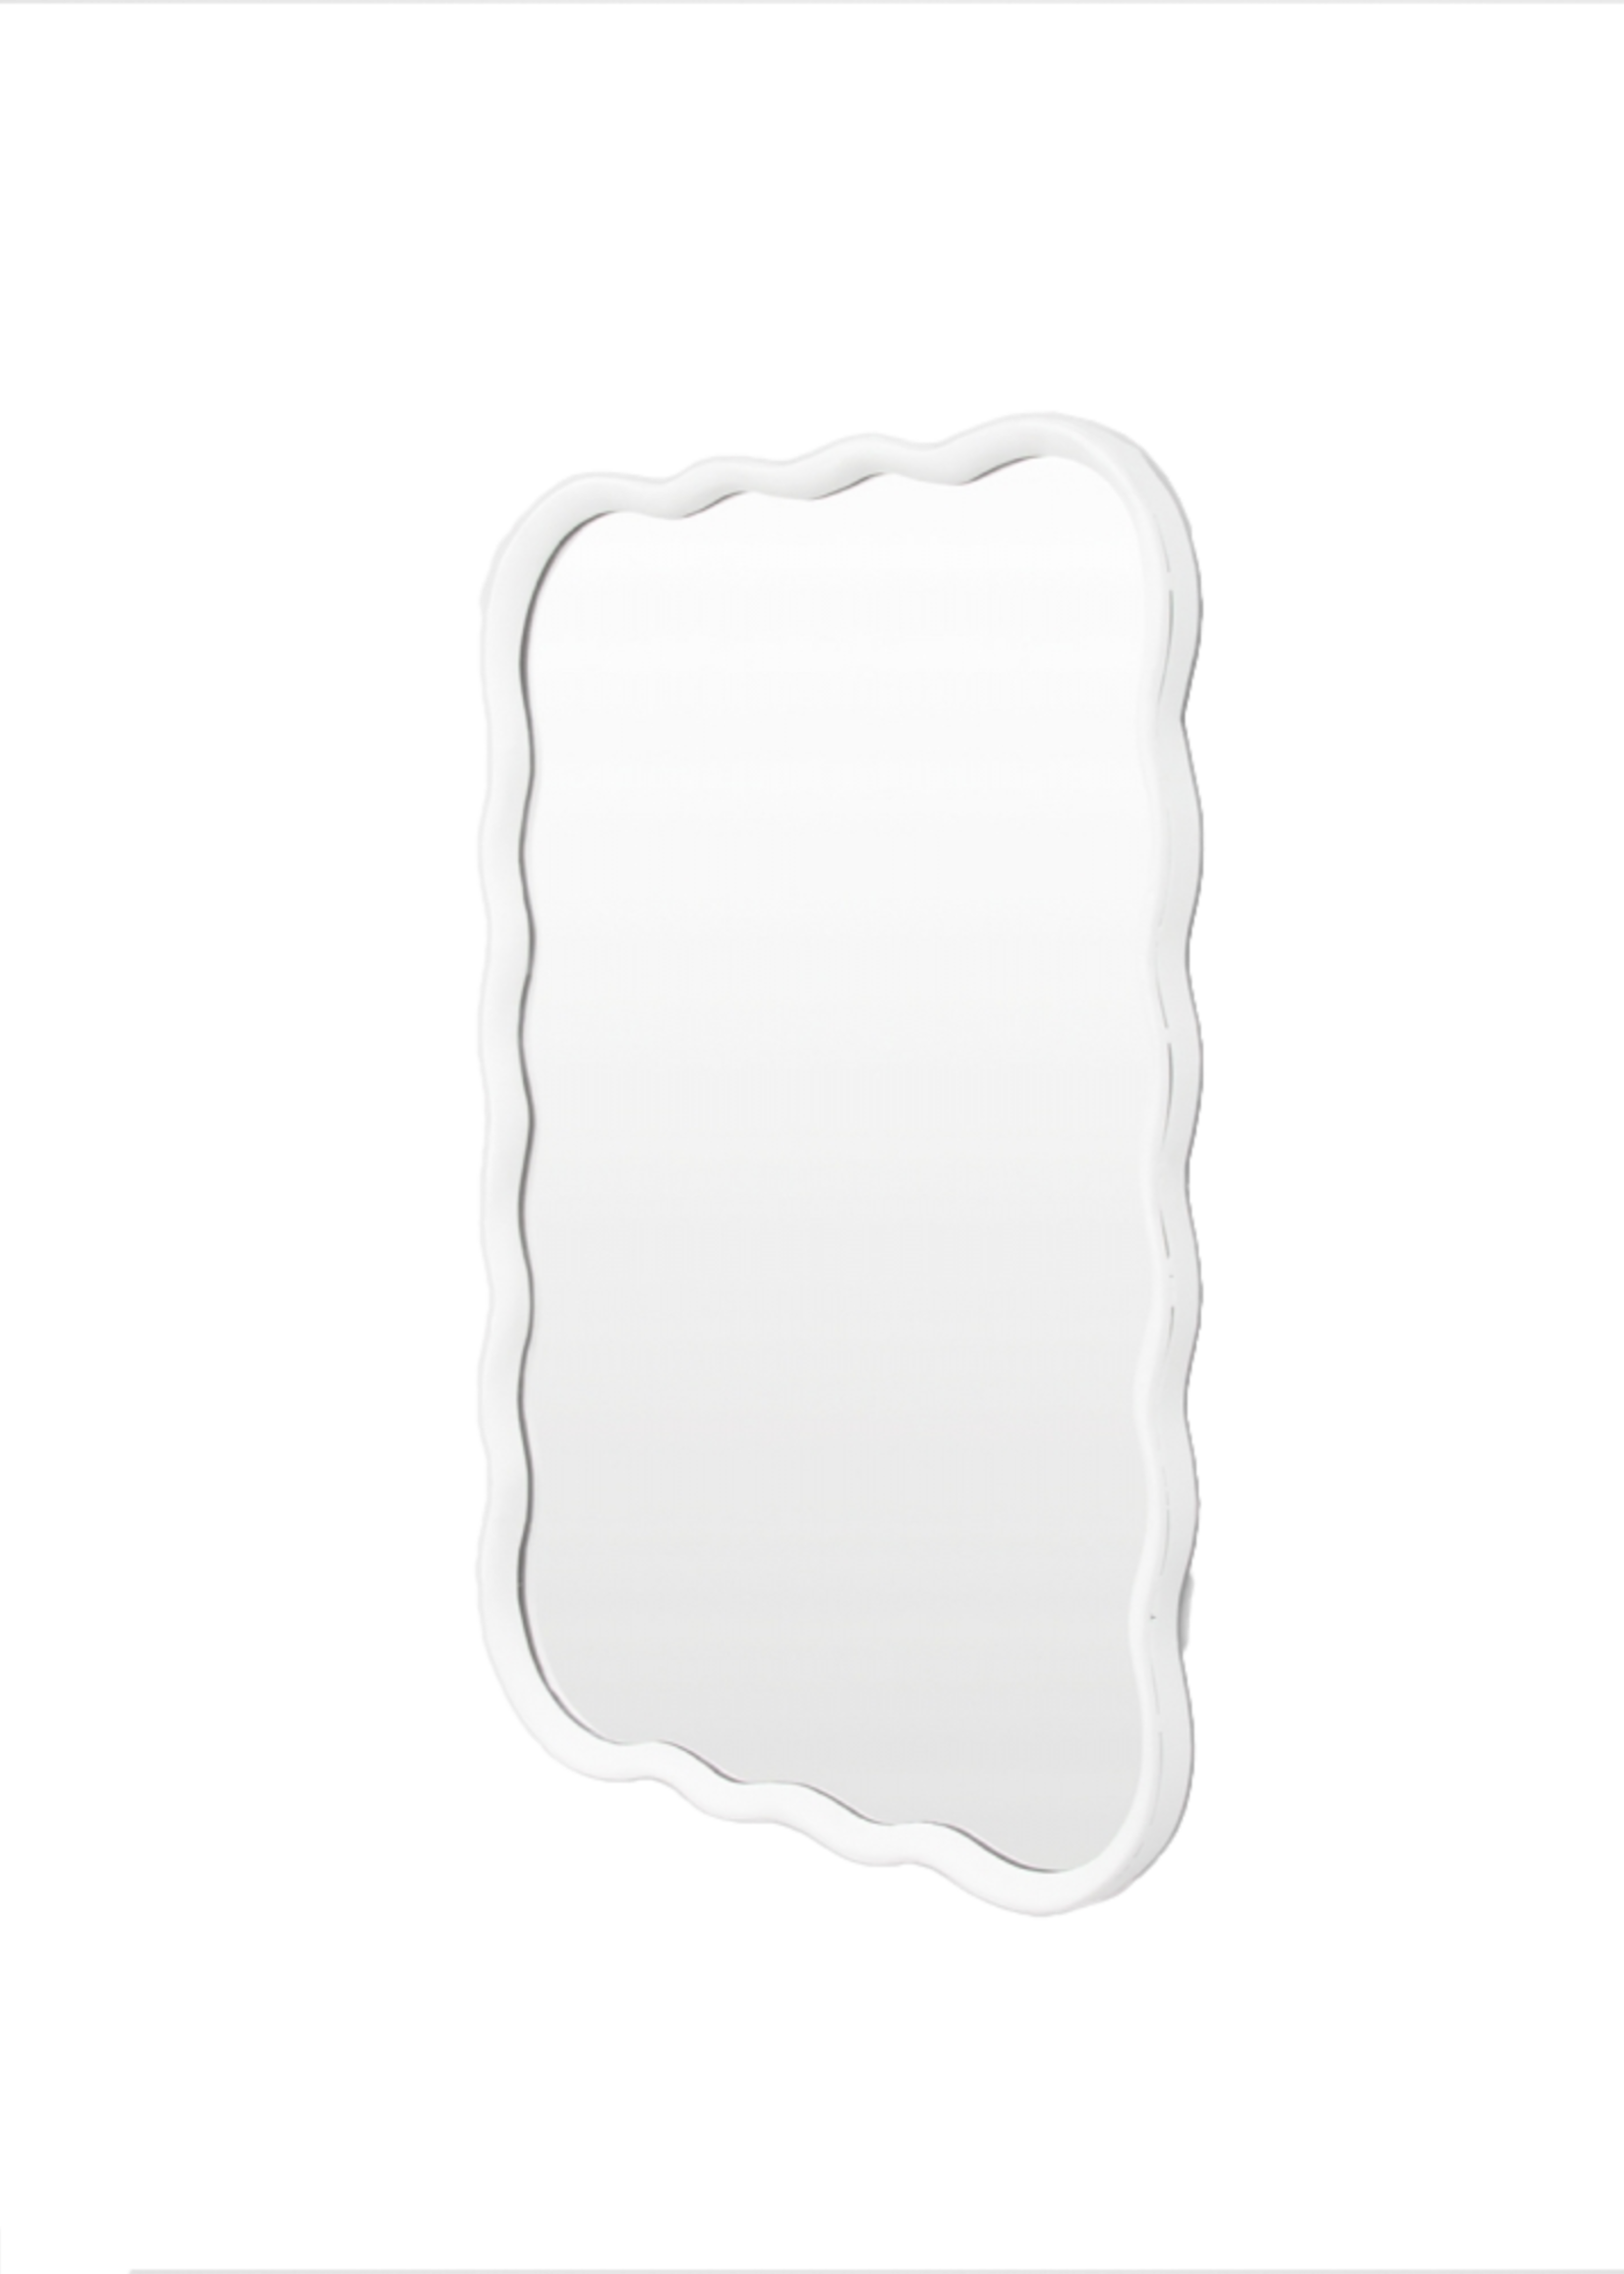 Jemima White Mirror 56 x 79 cm